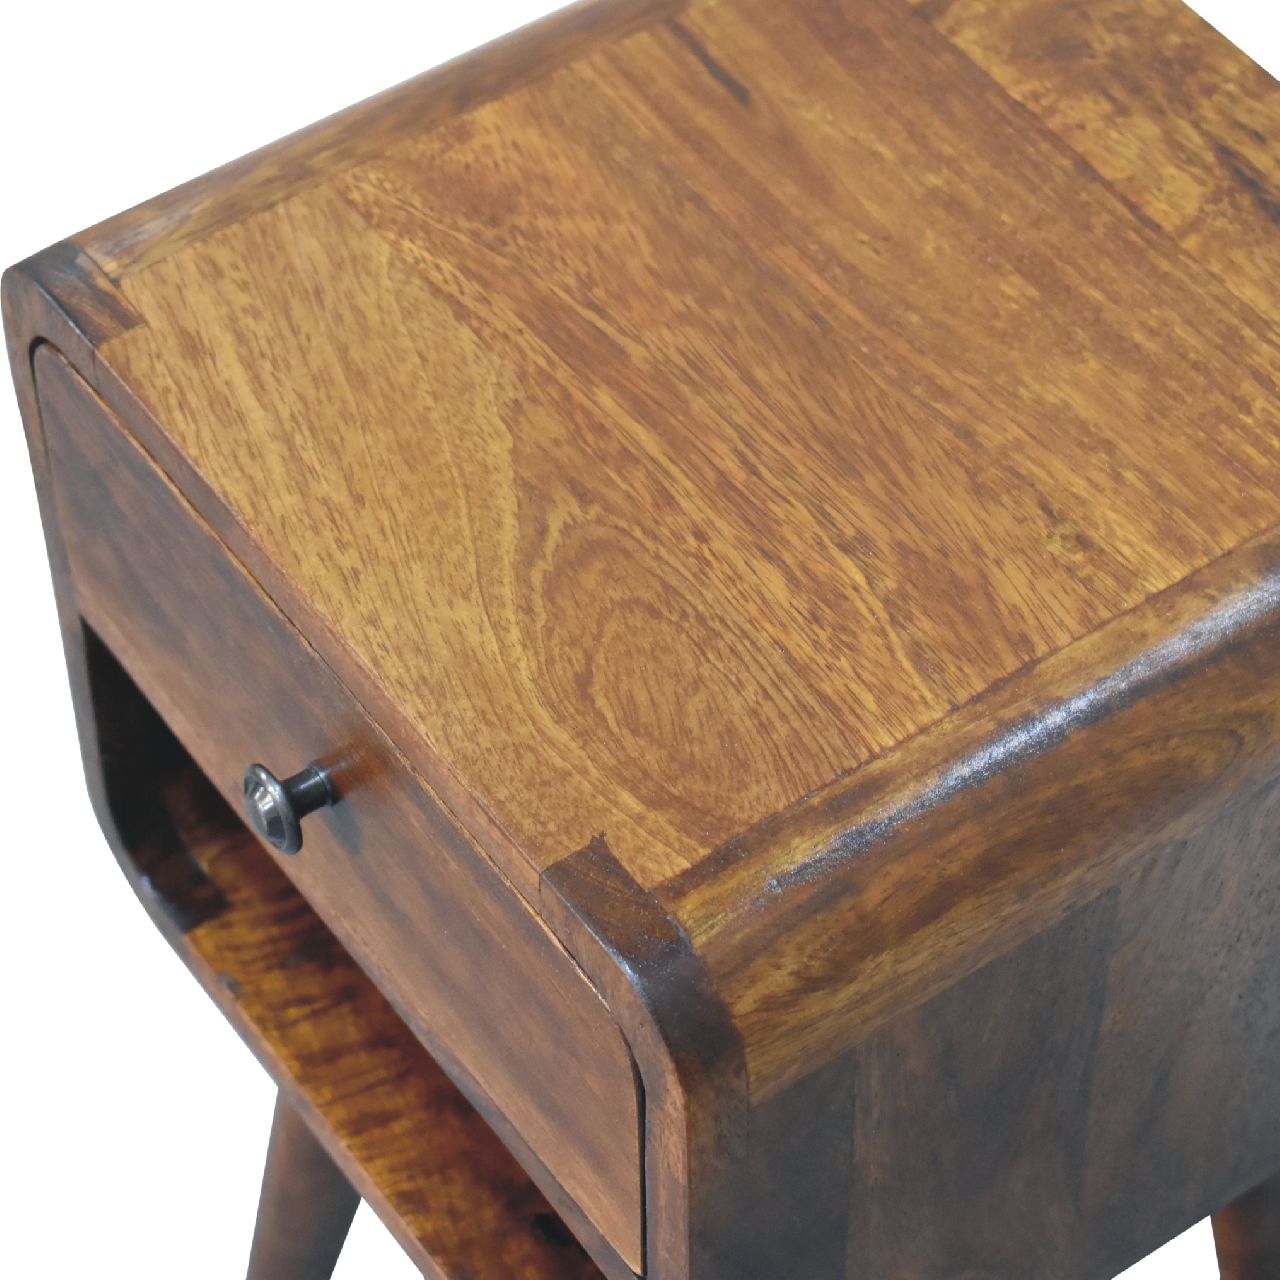 Mini Century Lower Open Slot Solid Wood Compact Bedside Table in Chestnut Finish | MalletandPlane.com